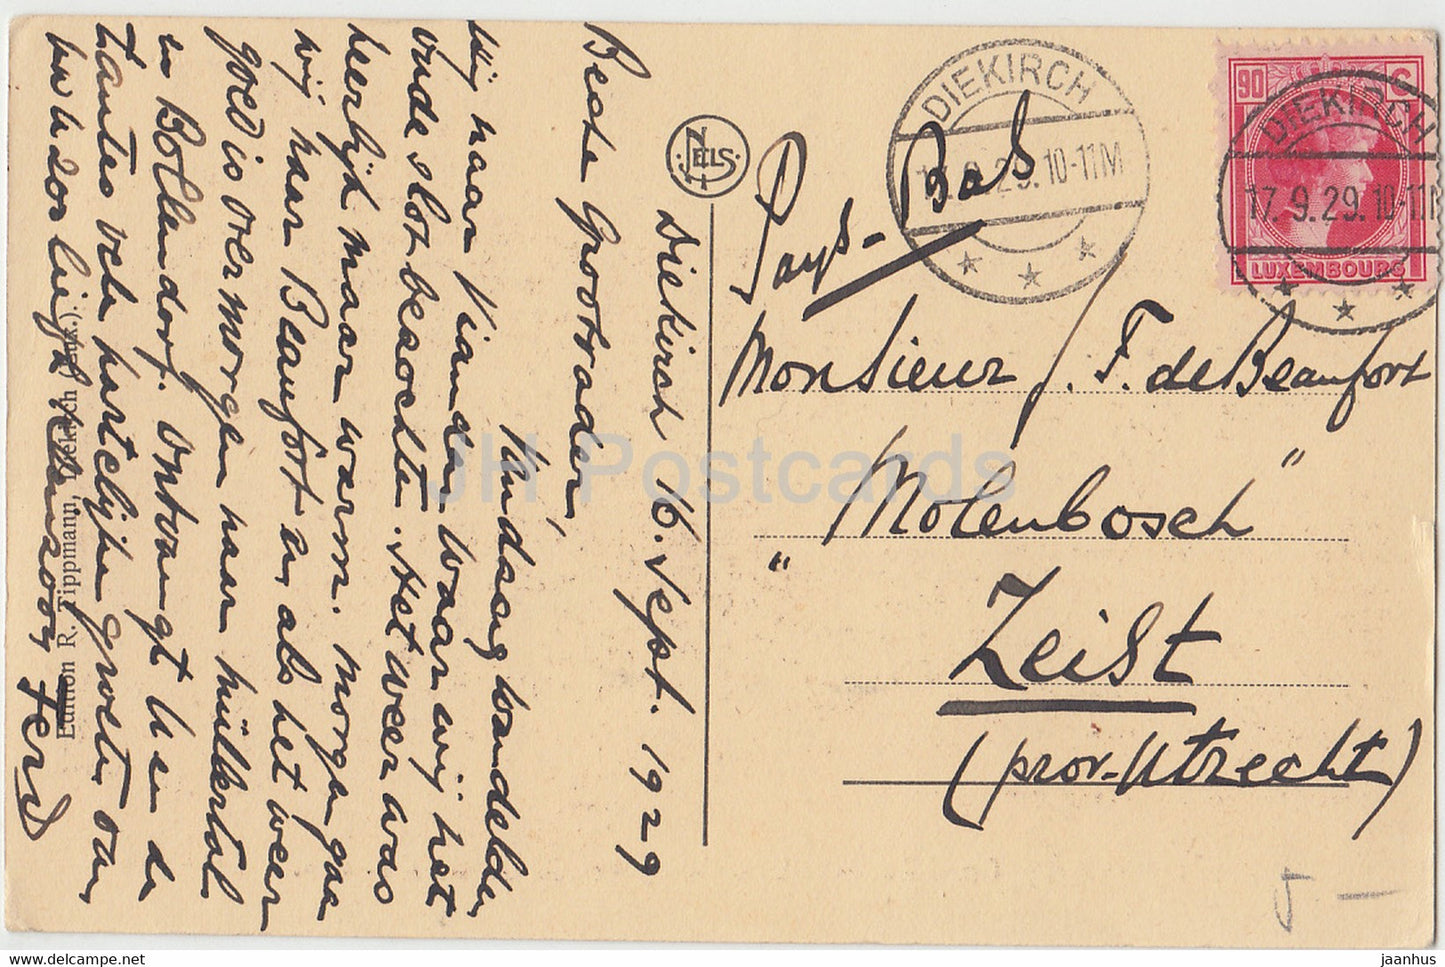 Grand Duche de Luxembourg - Château Granducal de Colmar Berg - château - carte postale ancienne - 1929 - Luxembourg - occasion